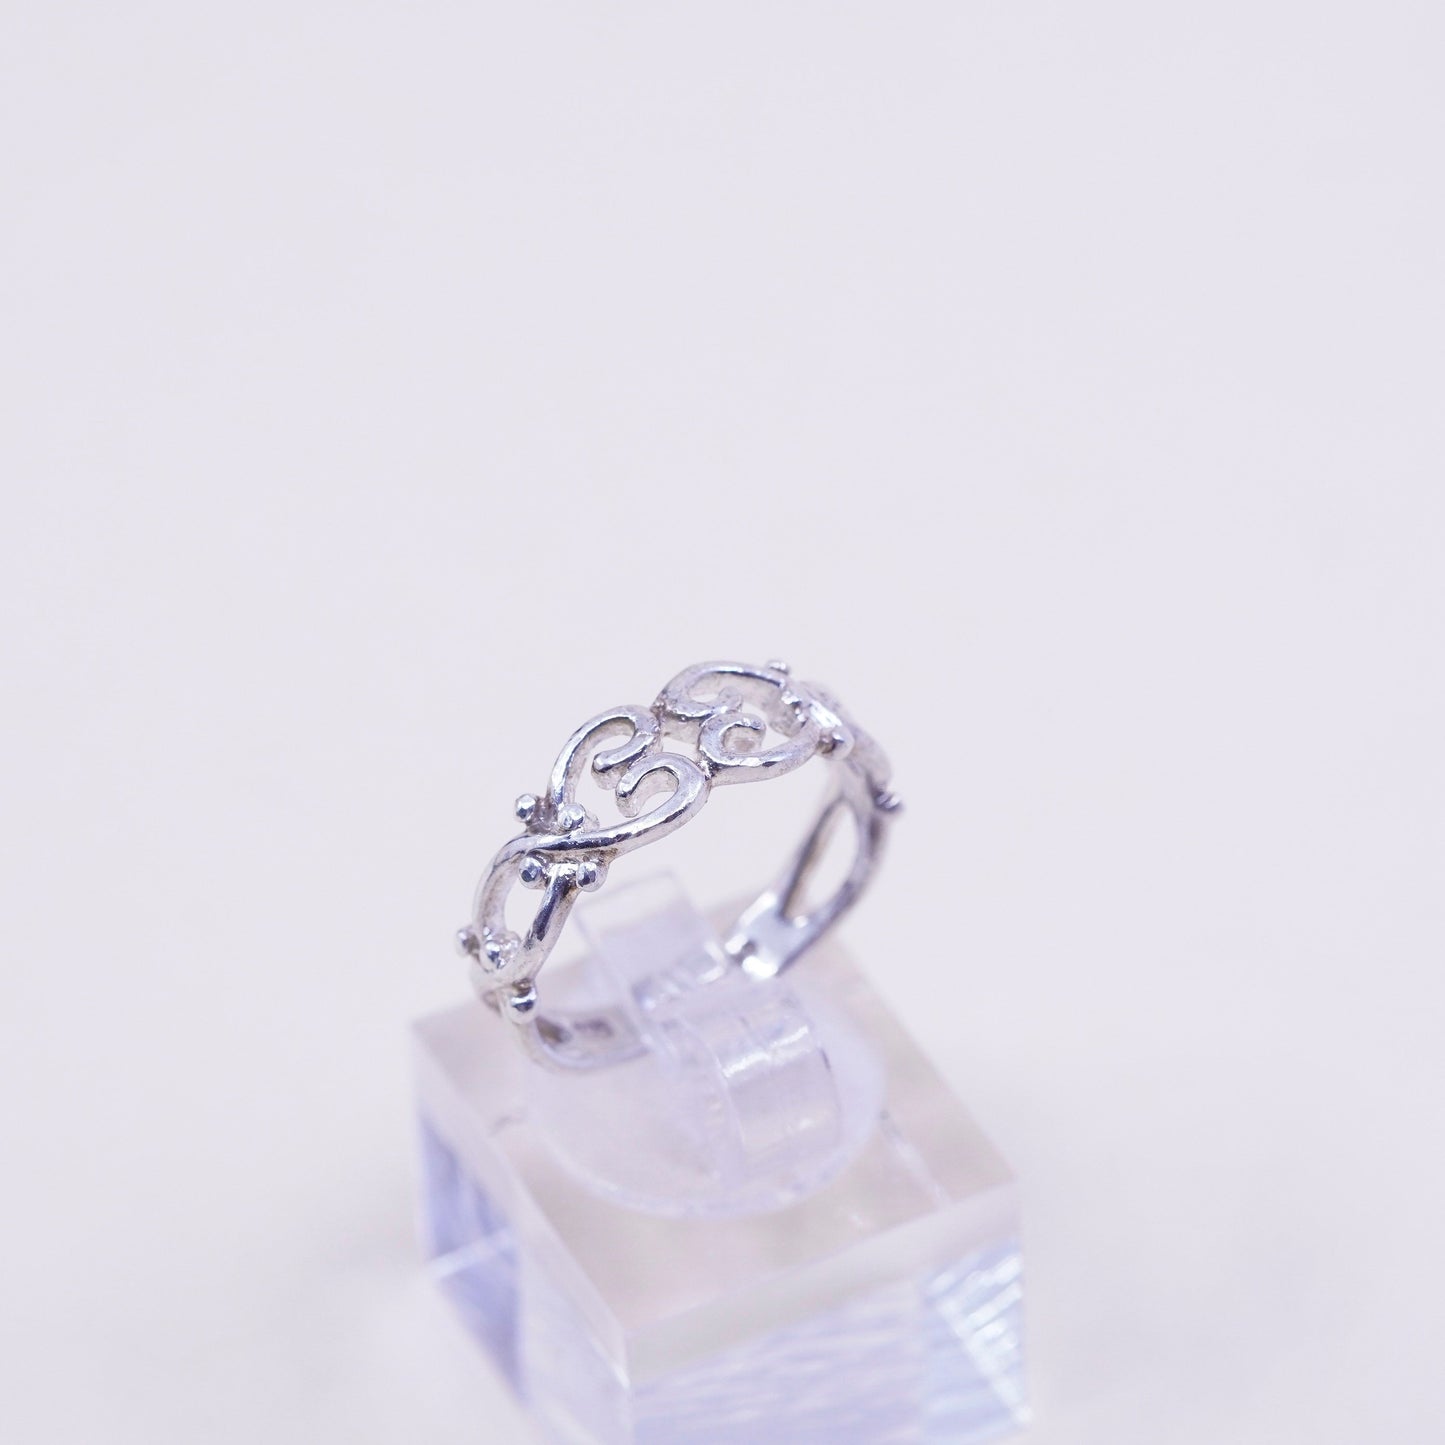 Size 6.75, vintage sterling silver handmade ring, filigree 925 band